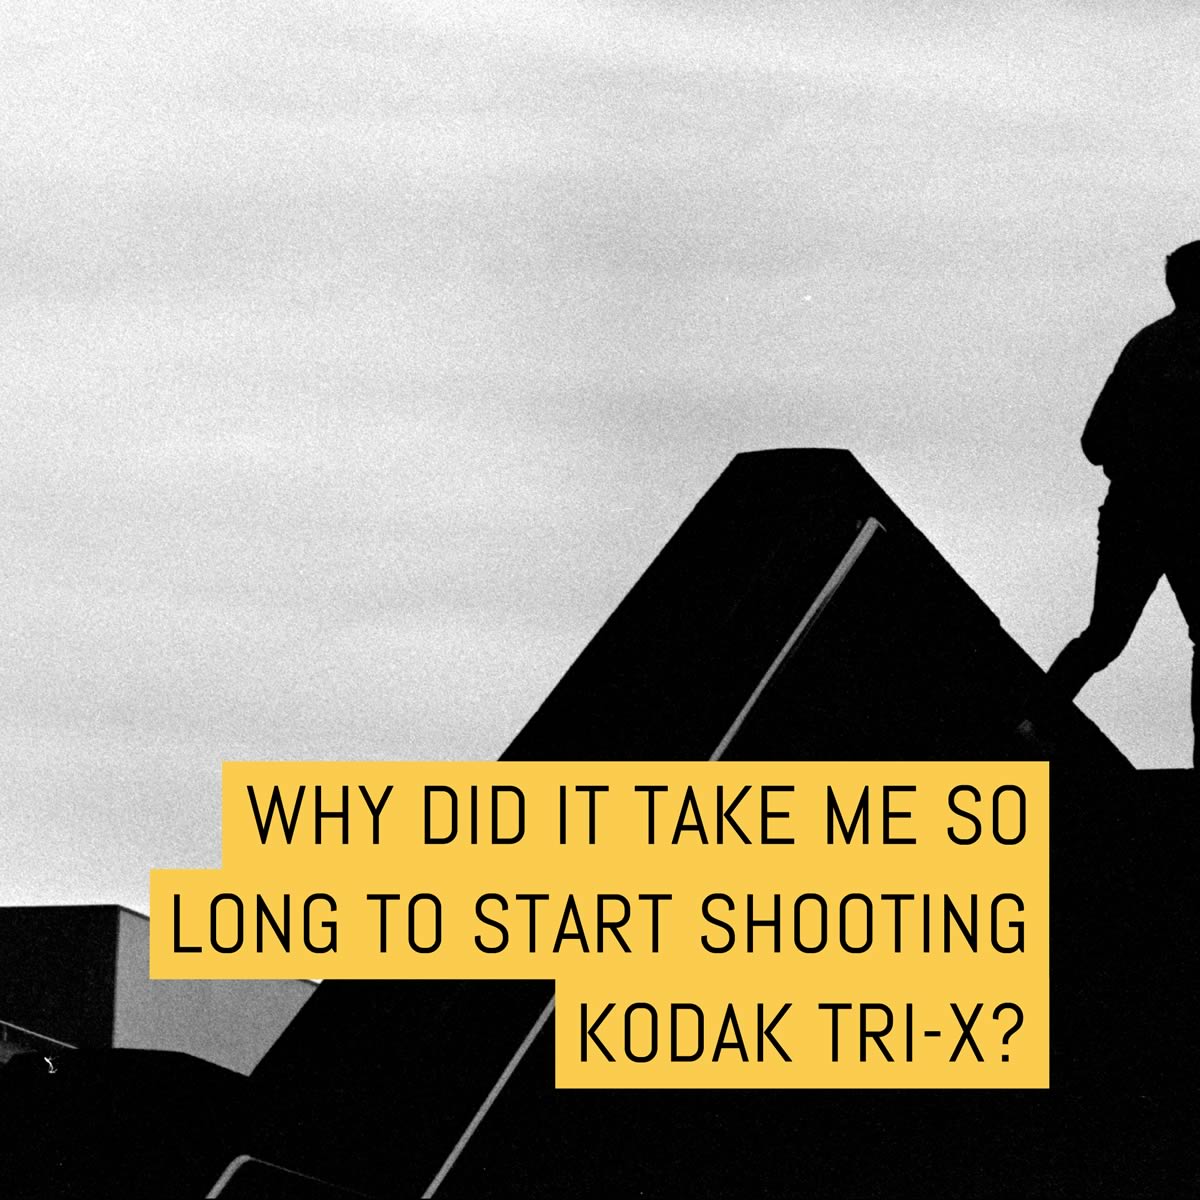 Cover - Why did it take me so long to starts shooting Kodak Tri-X